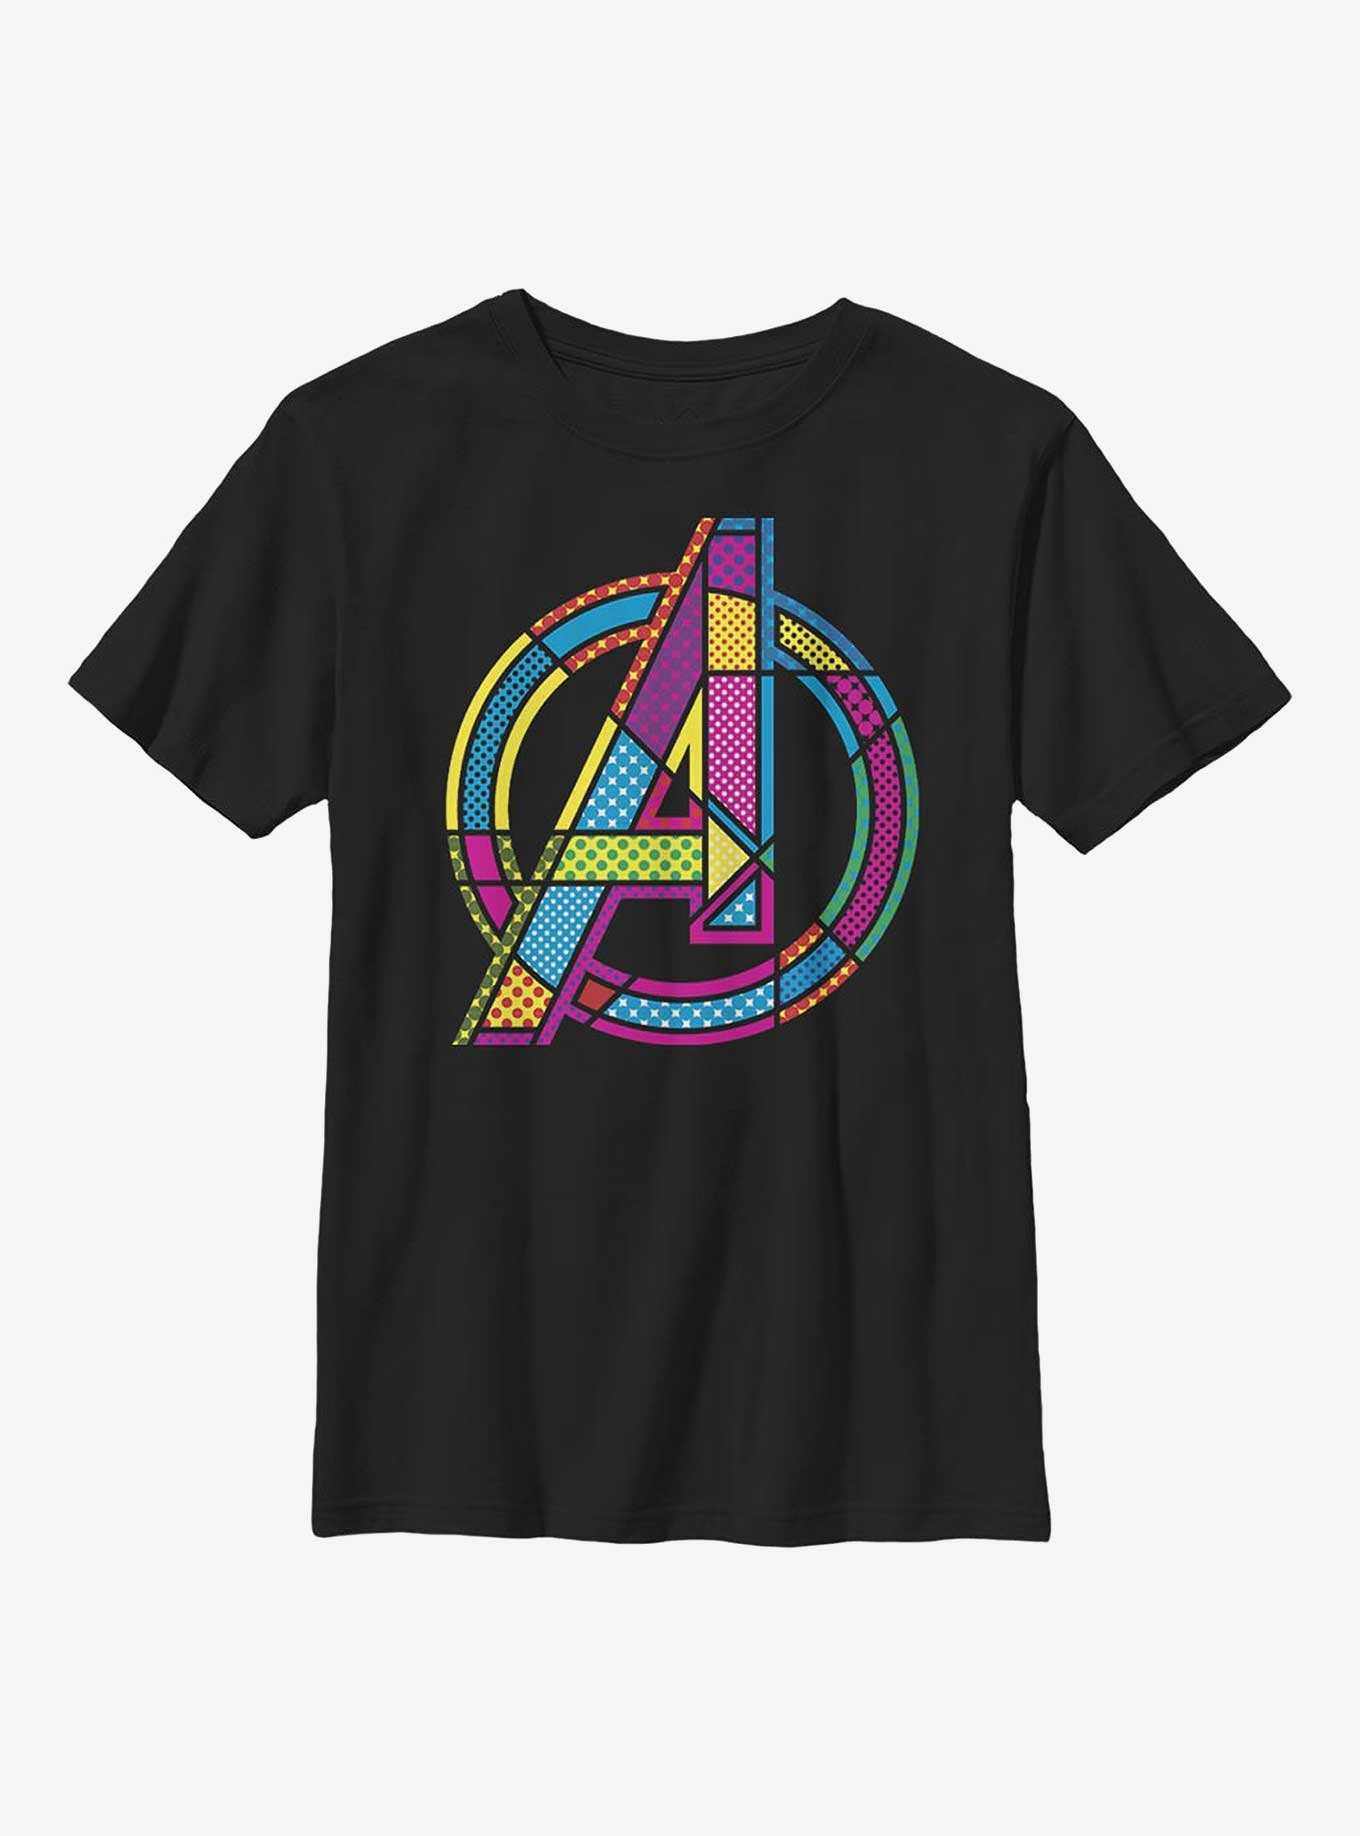 Marvel Avengers Halftone Pop A Youth T-Shirt, , hi-res